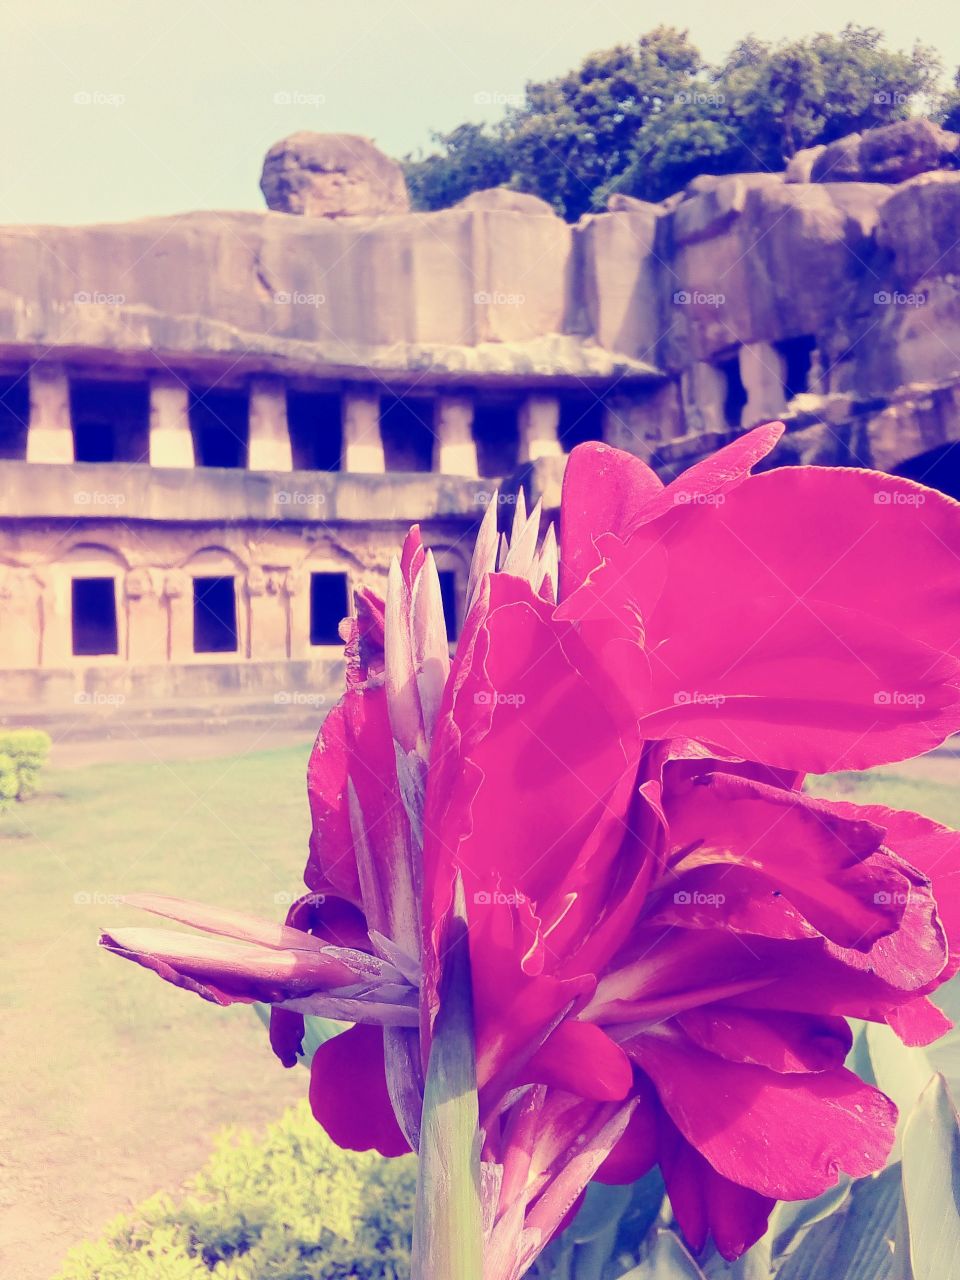 Khandagiri Flowers